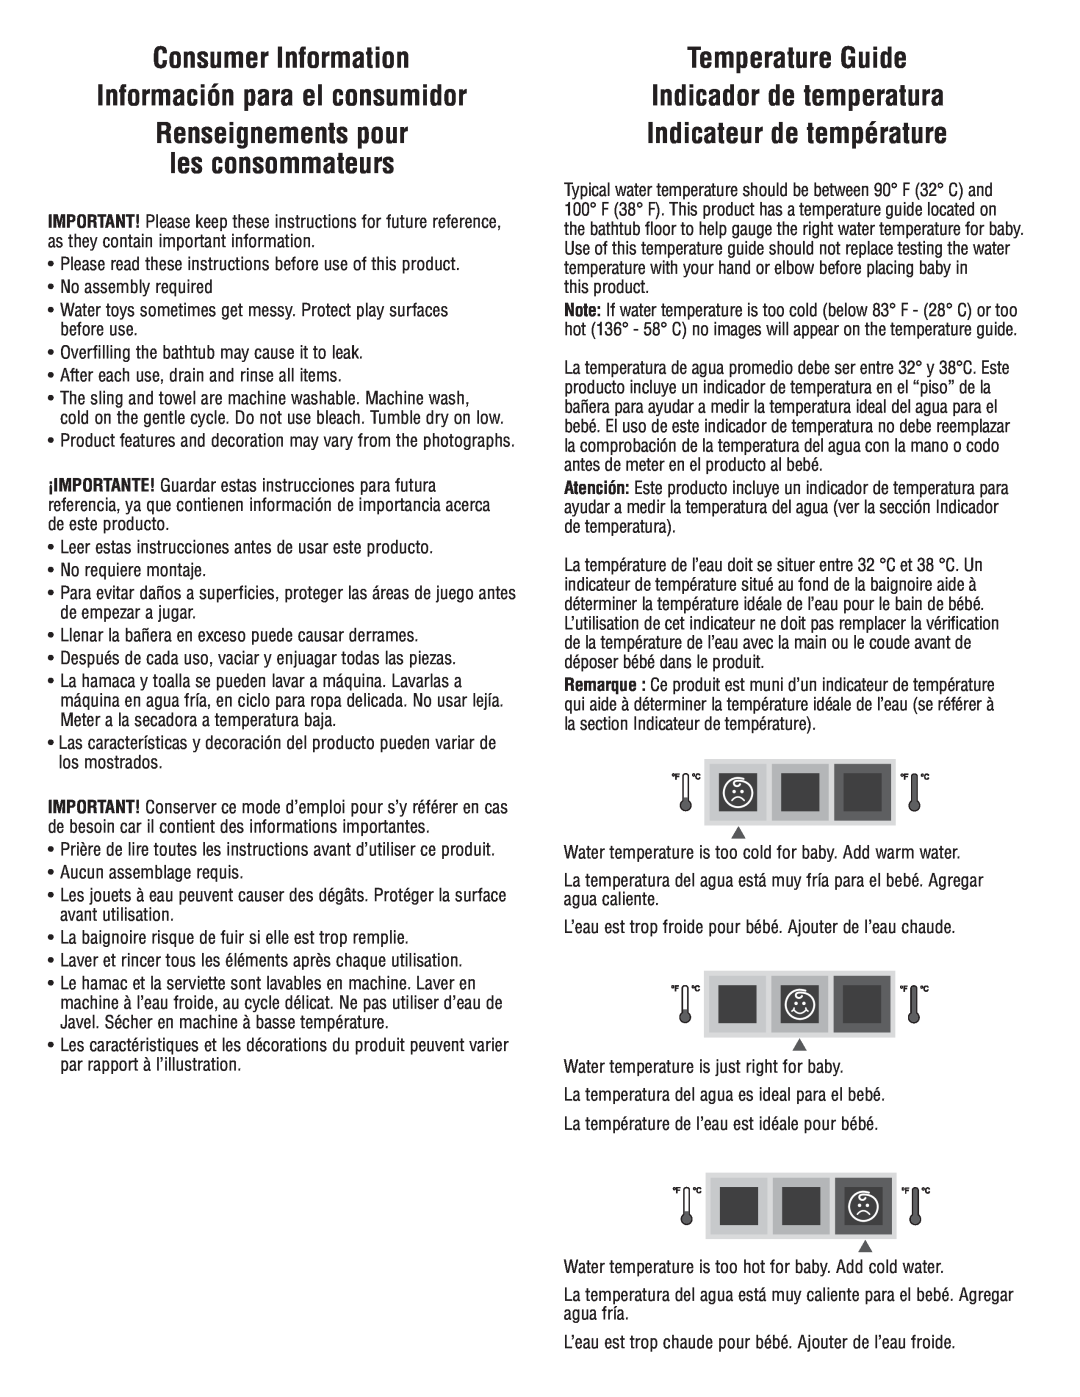 Fisher-Price P9042 manual Temperature Guide Indicador de temperatura Indicateur de température 